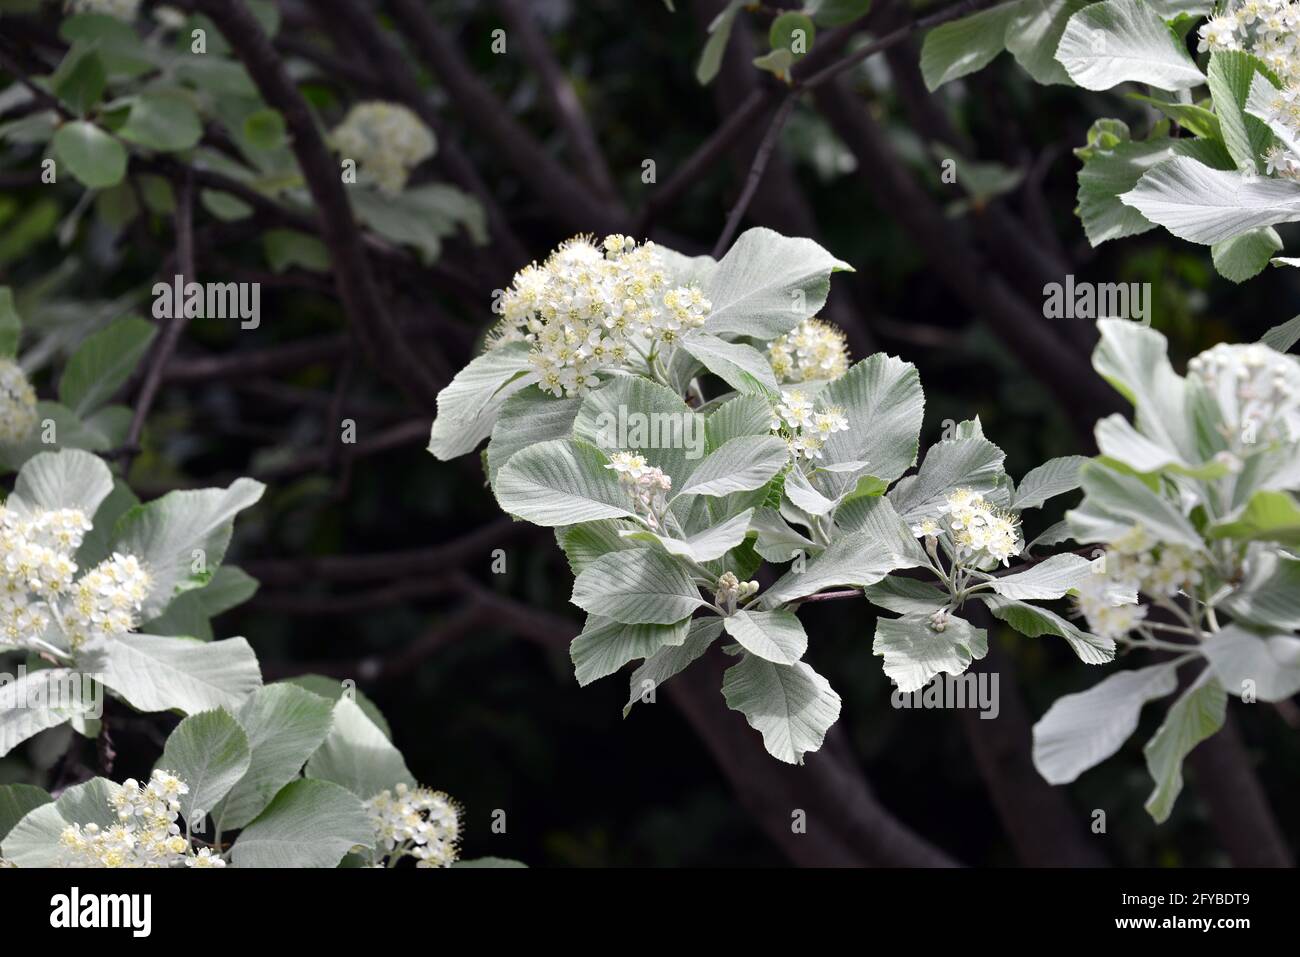 whitebeam or common whitebeam, Echte Mehlbeere, Gewöhnliche Mehlbeere, Sorbus aria, lisztes berkenye Stock Photo